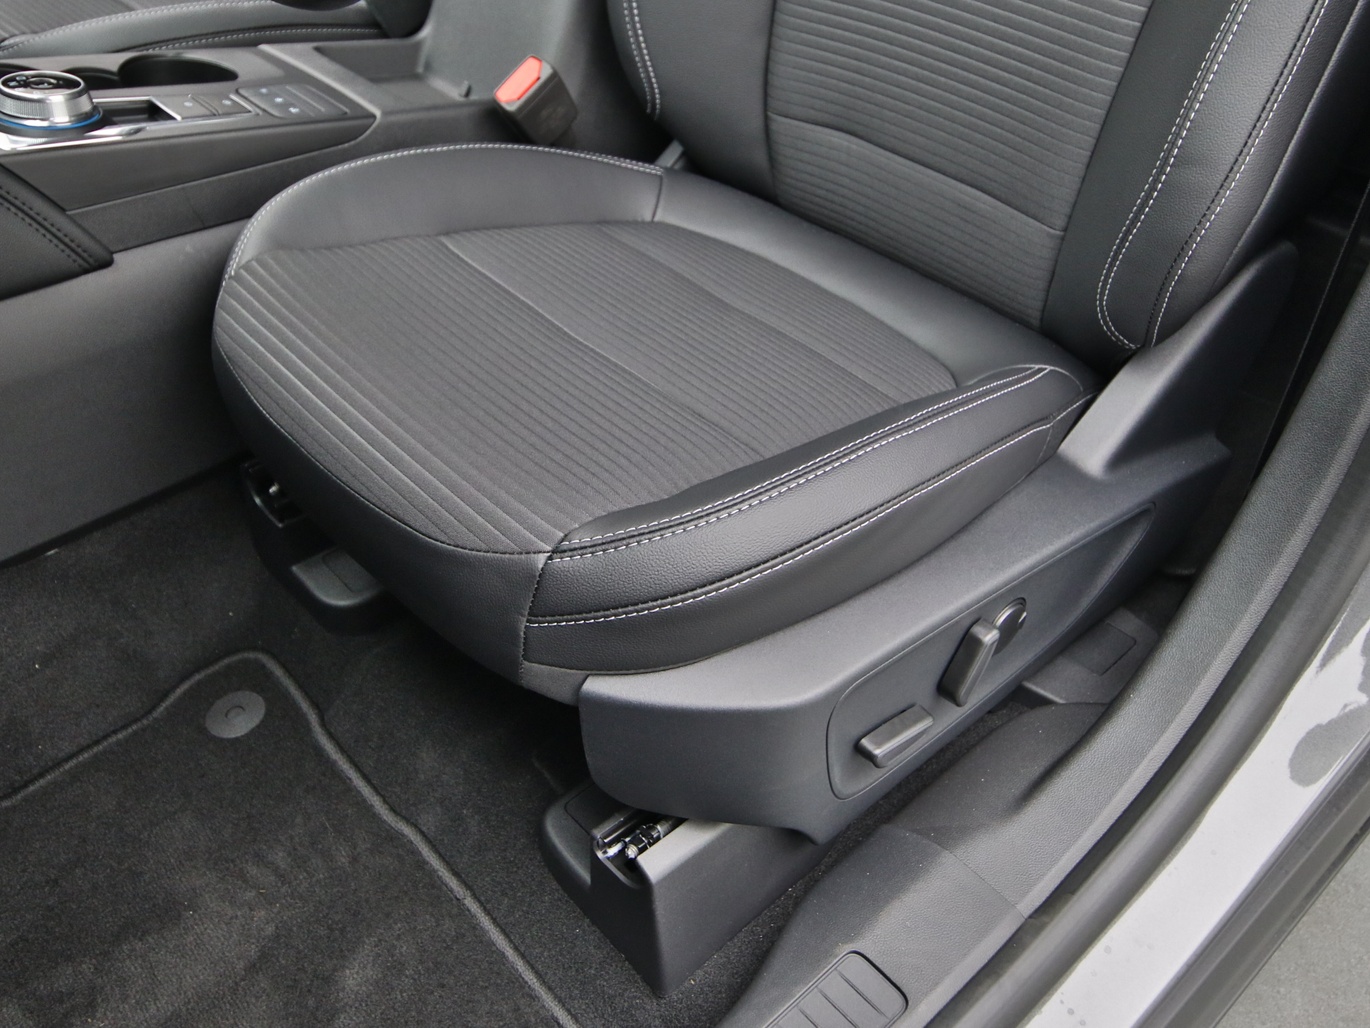  Ford Kuga Titanium X 190PS Full-Hybrid Aut. 4x4 in Magnetic Grau 